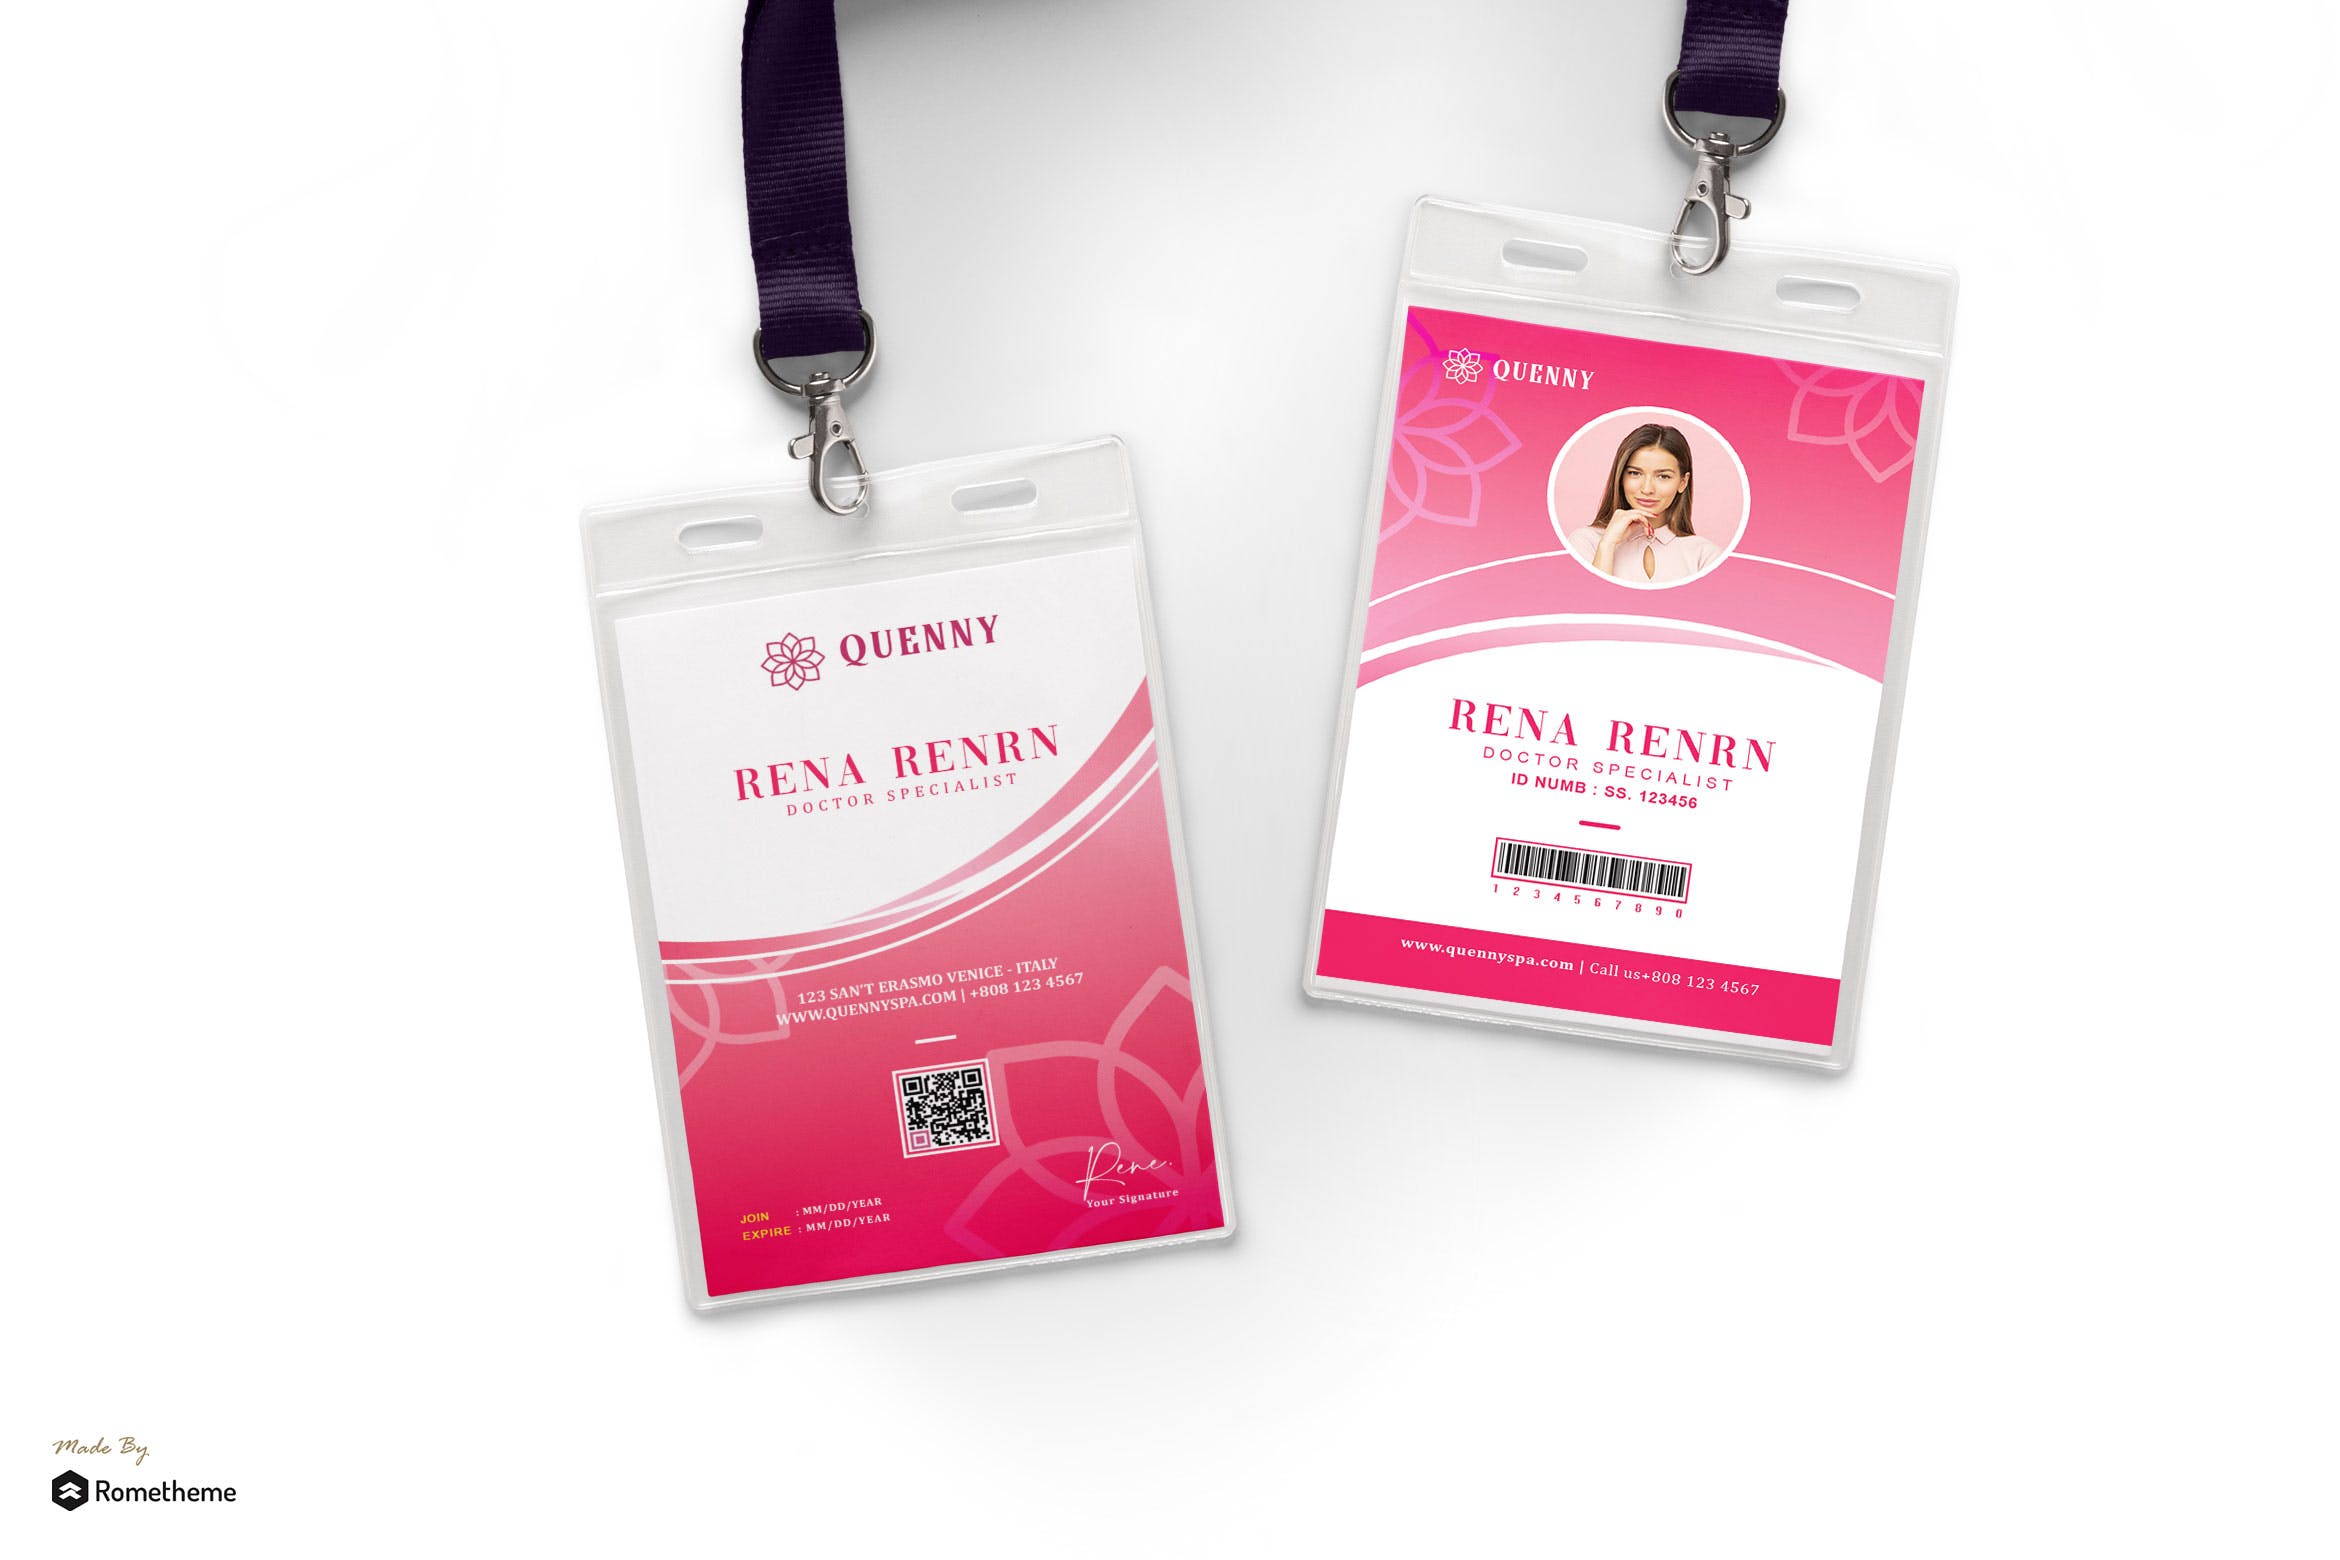 美容SPA会所/美容化妆品企业工牌胸牌设计模板 Quenny – Spa and Beauty Id Card HR插图